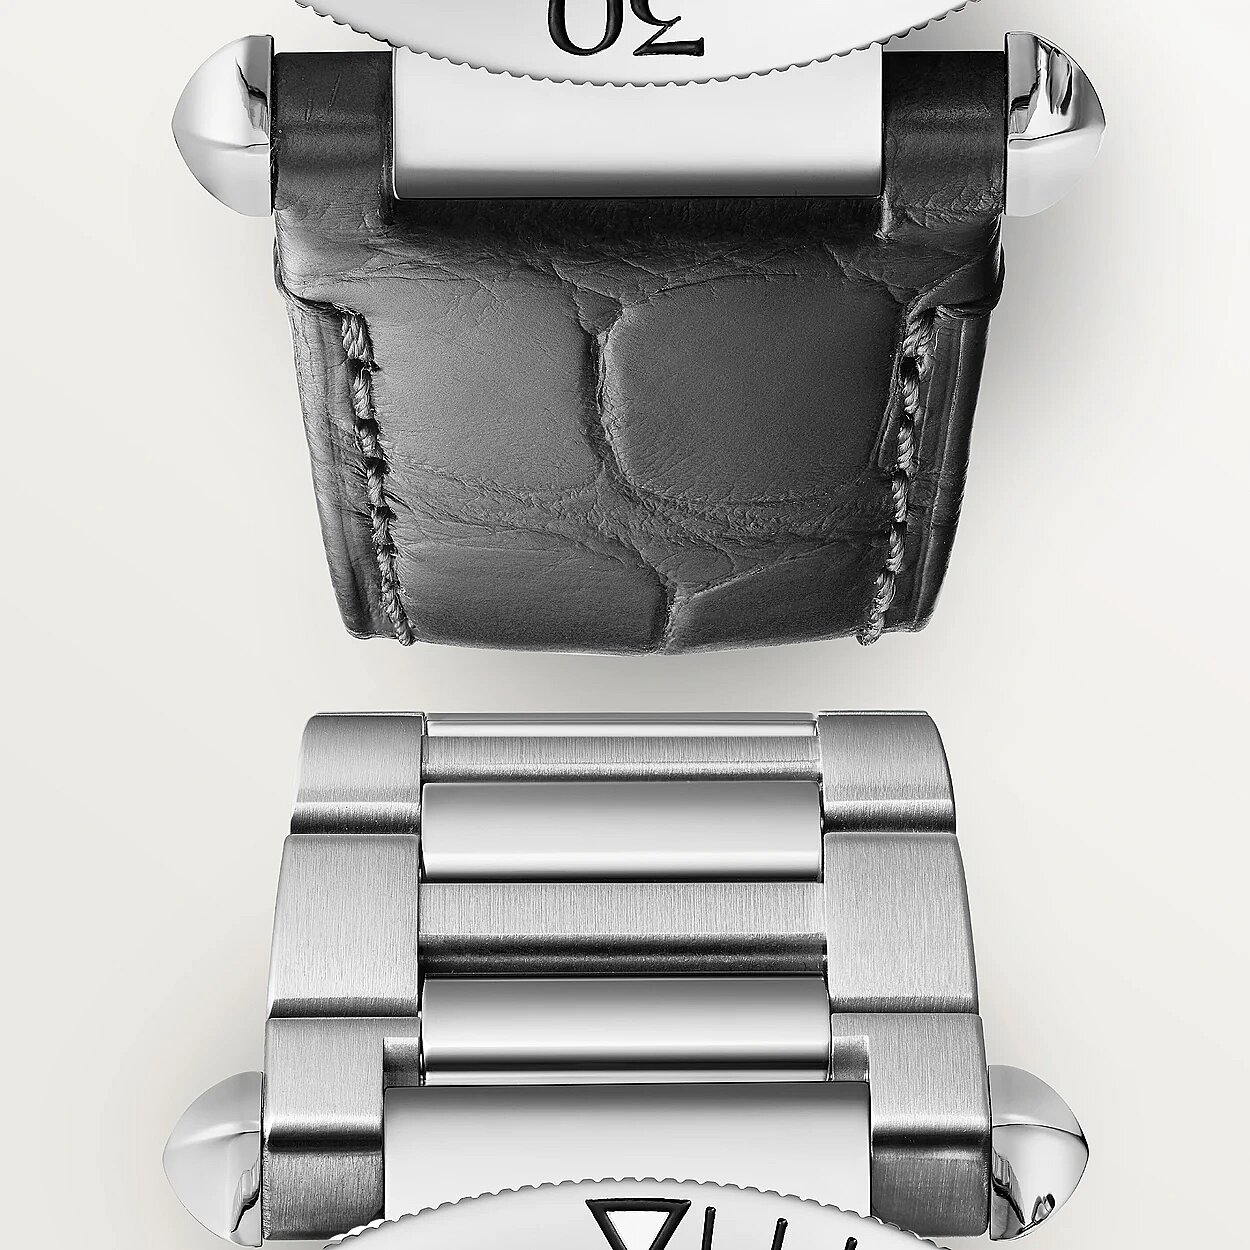 Cartier Pasha Chronograph WSPA0018 Detalle brazalete y correa